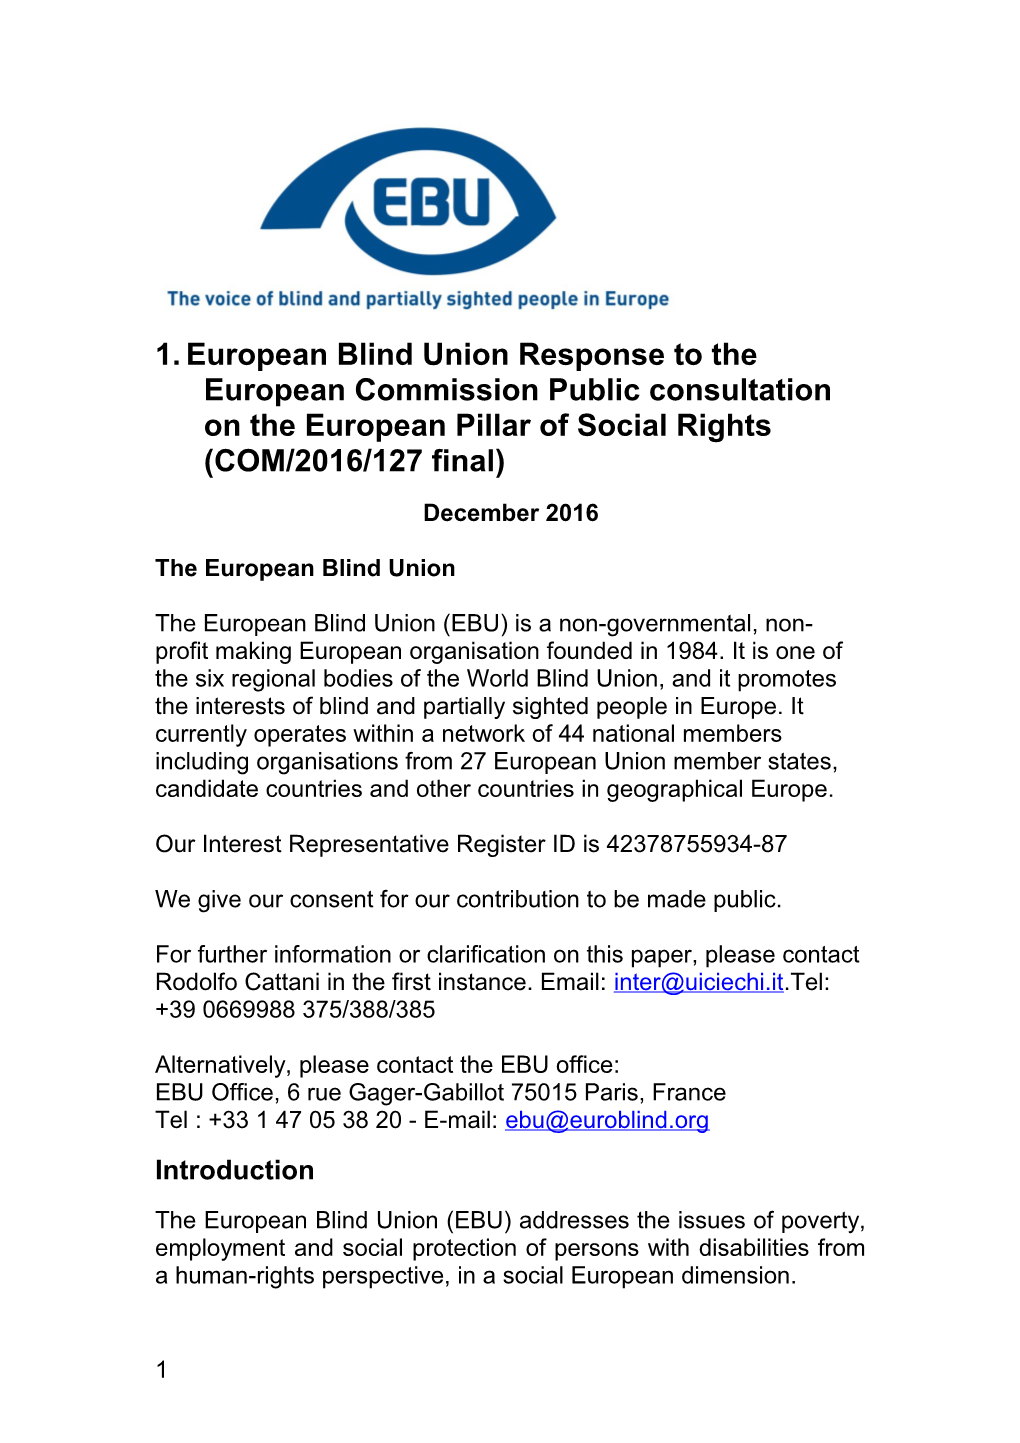 The European Blind Union